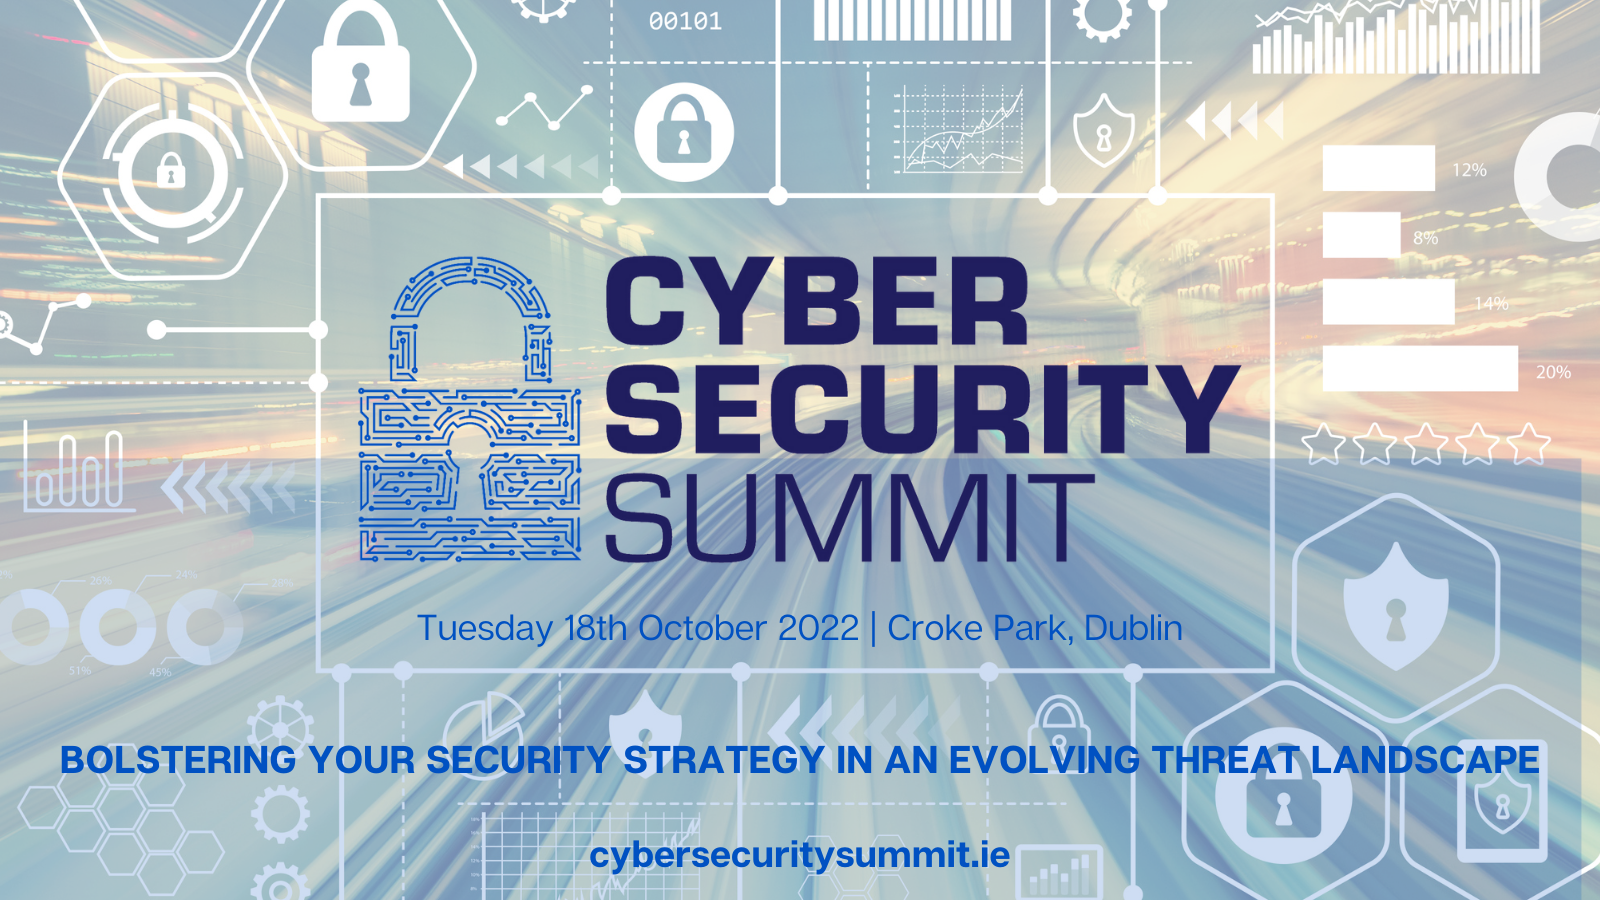 Cyber Security Summit Cyber Ireland